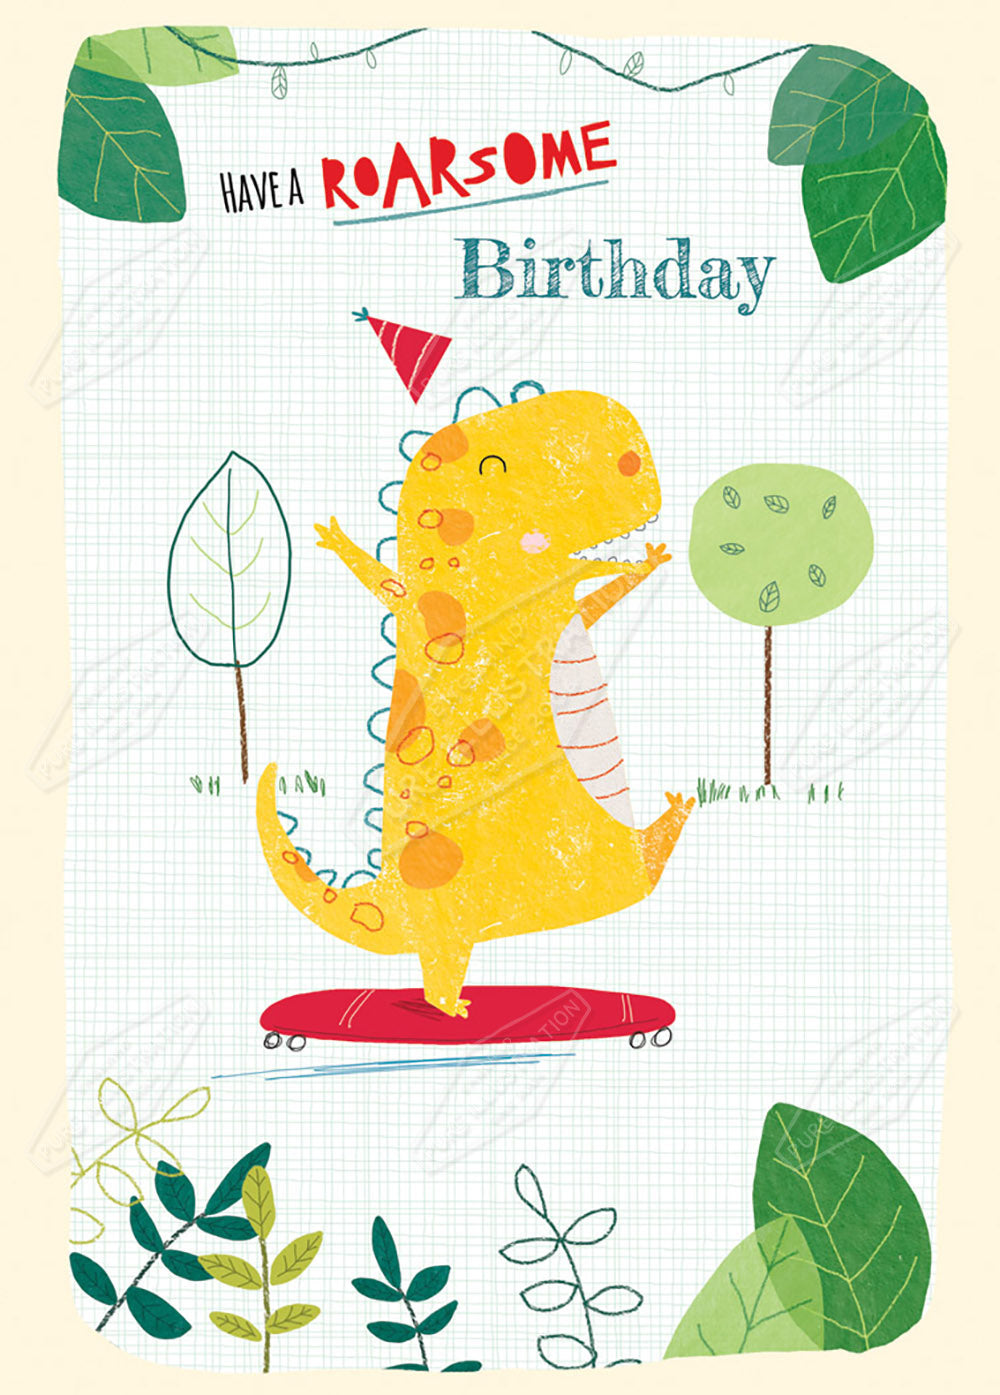 Roarsome Birthday Dinoasur by Cory Reid for Pure Art Licensing Agency & Surface Design Studio